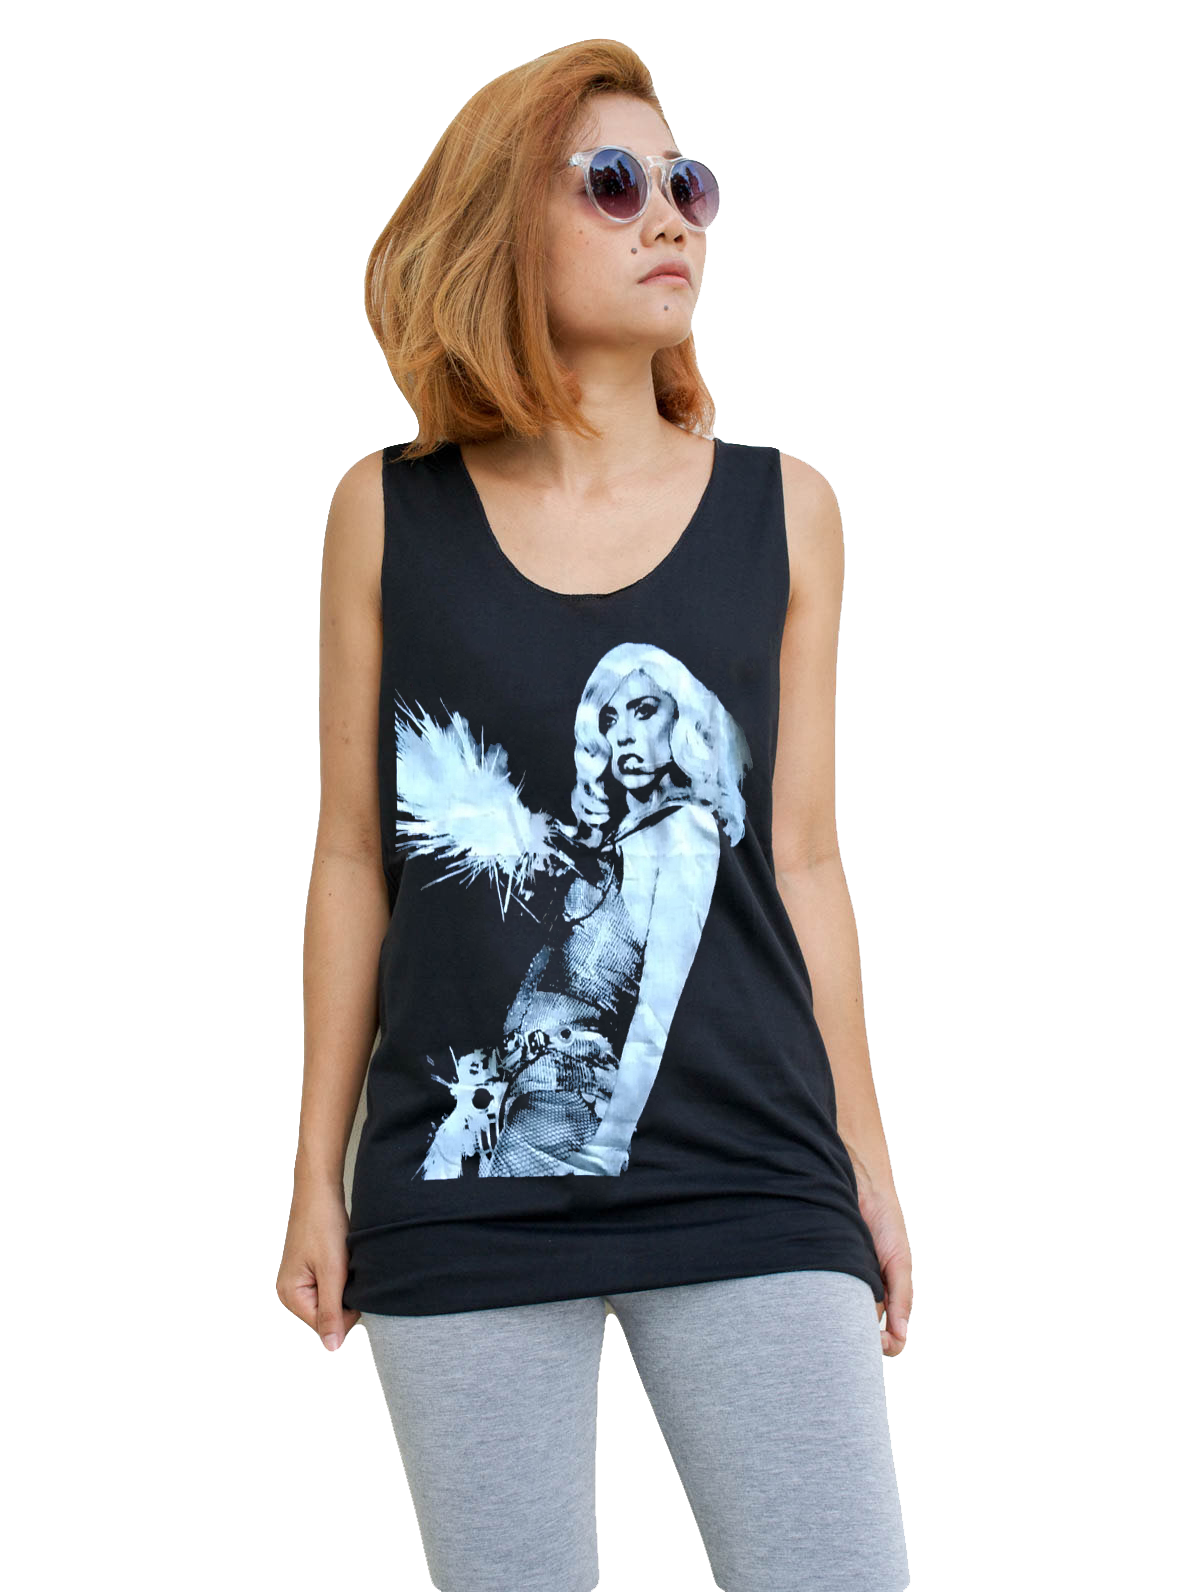 Unisex Lady Gaga Tank-Top Singlet vest Sleeveless T-shirt